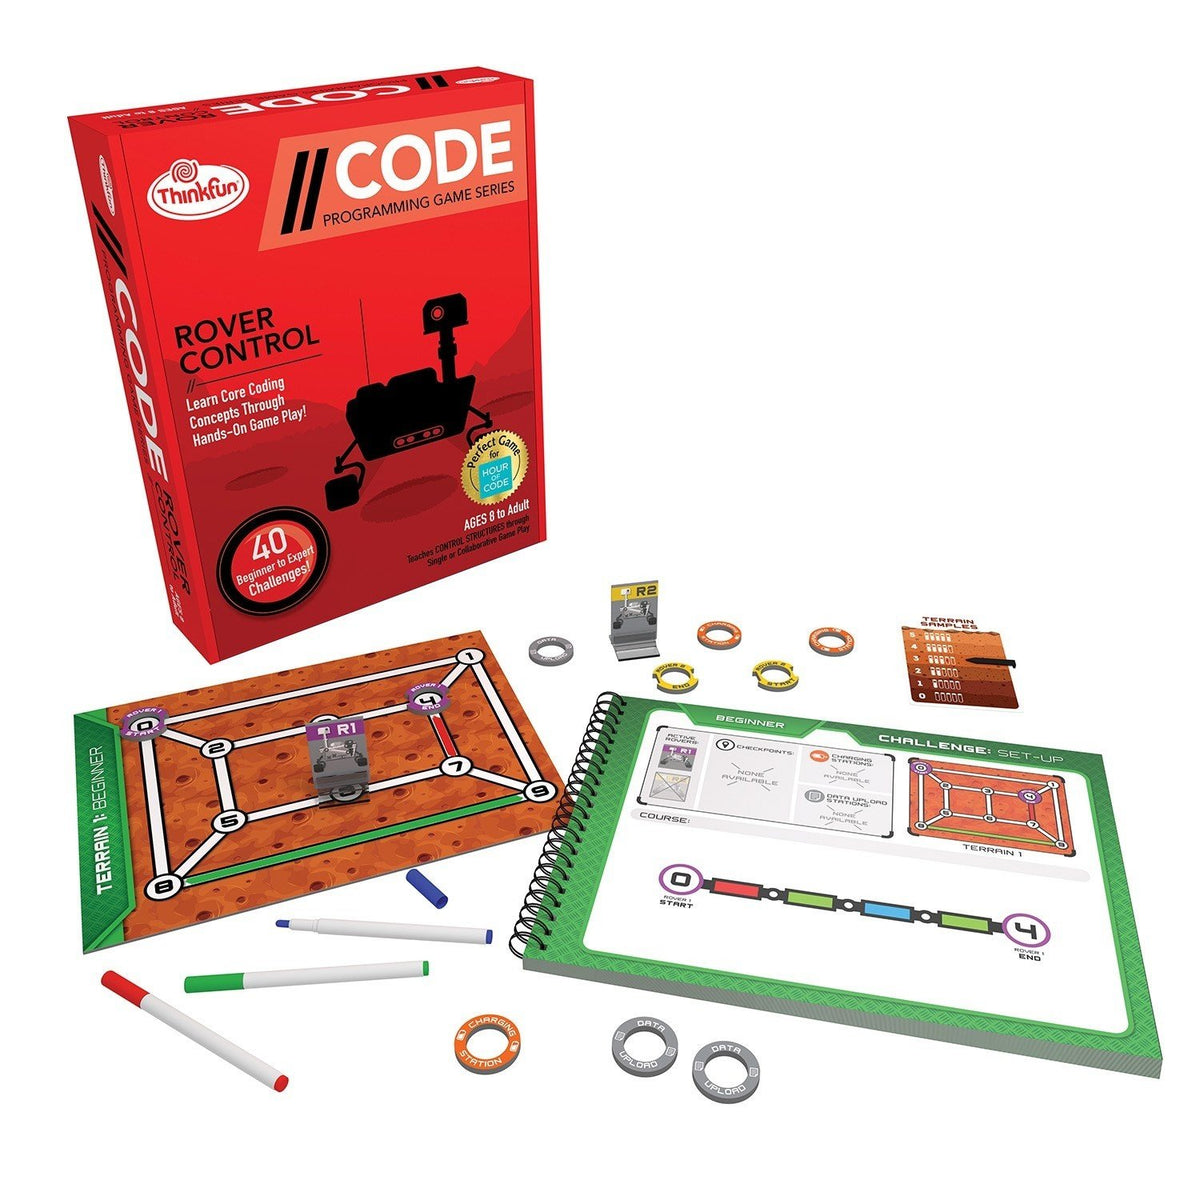 Thinkfun //CODE: Rover Control Game Rpp $30 - Good Games